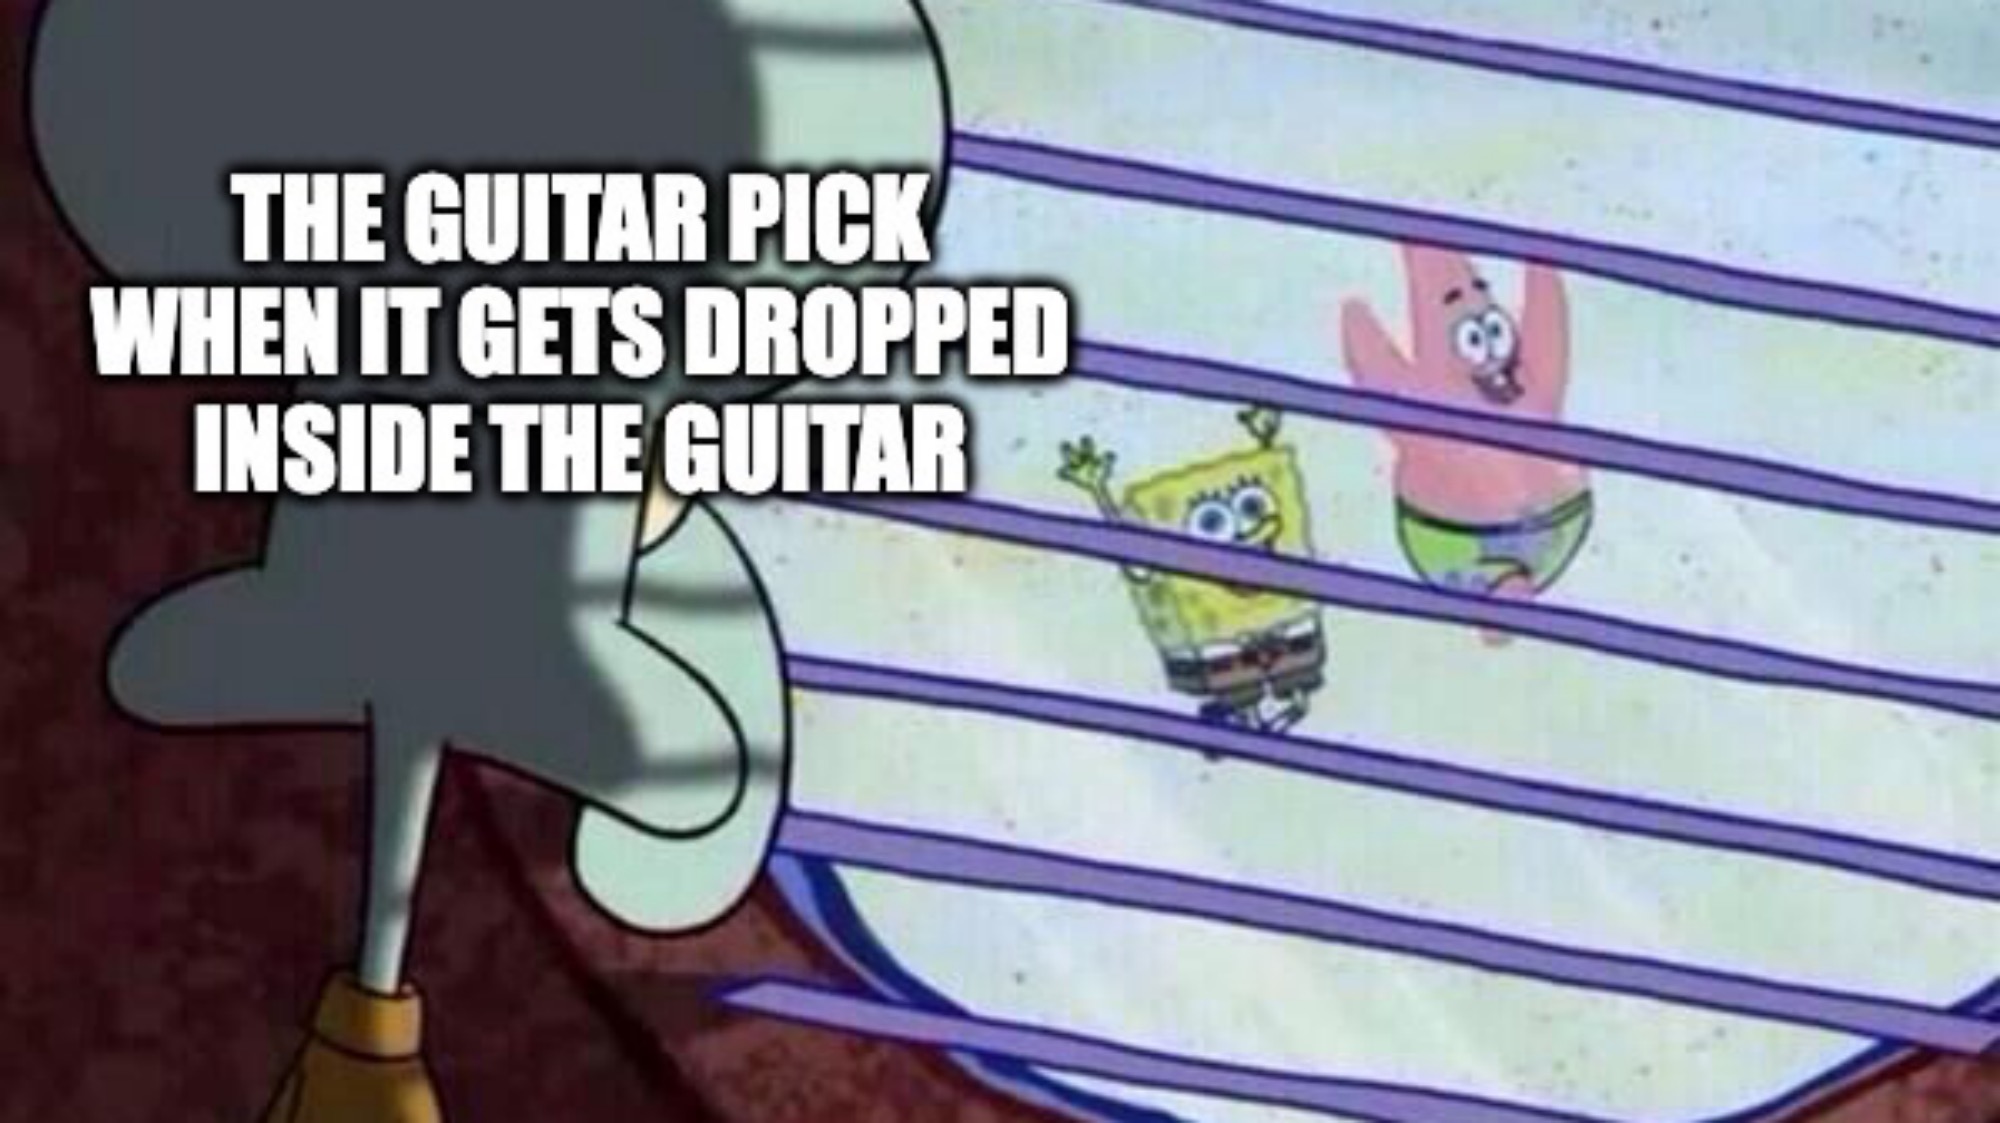 funny meme about guitar picks